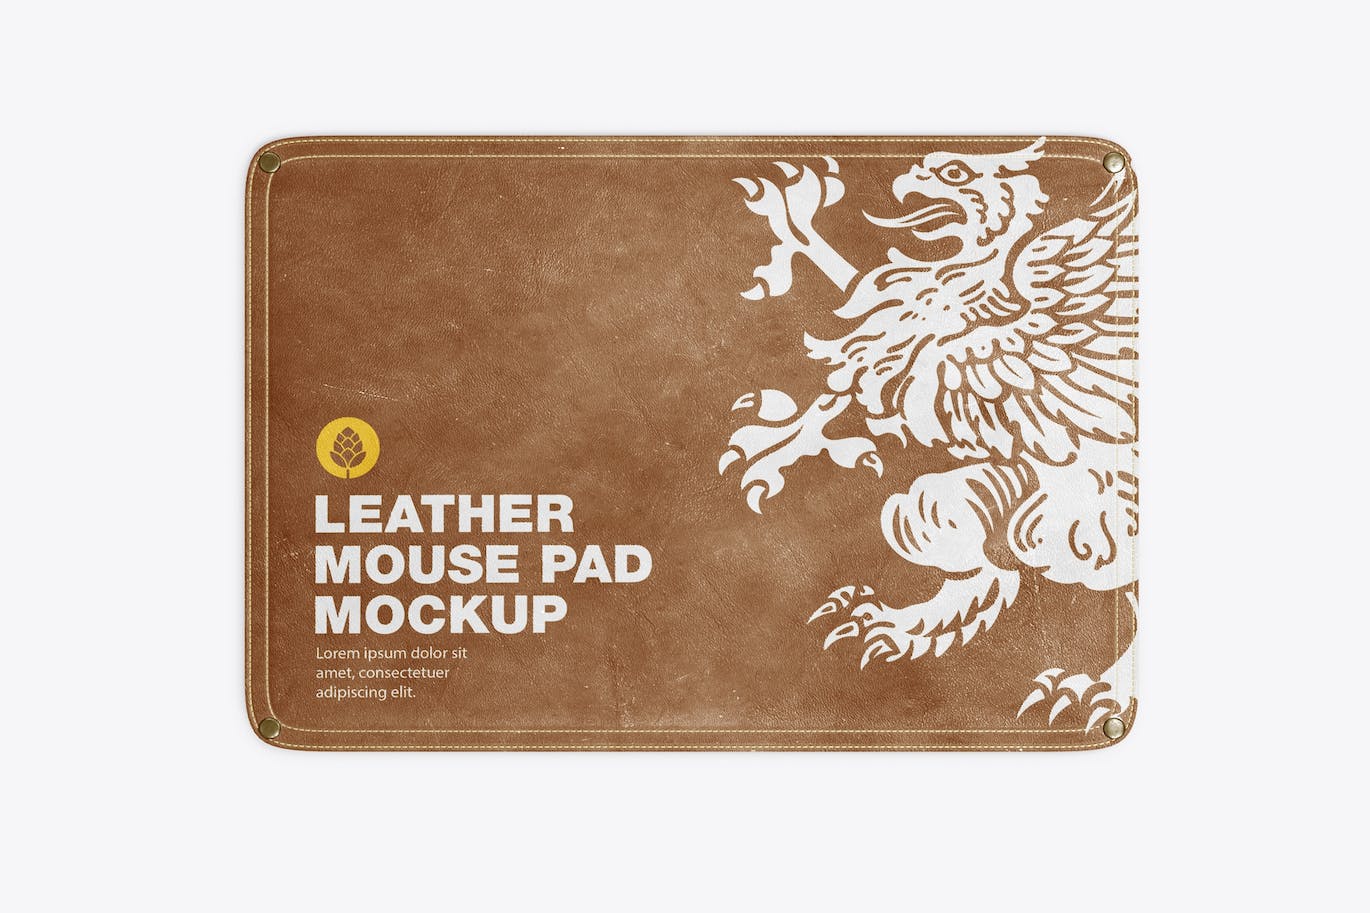 皮革鼠标垫设计样机 Leather Mouse Pad Mockup 样机素材 第1张